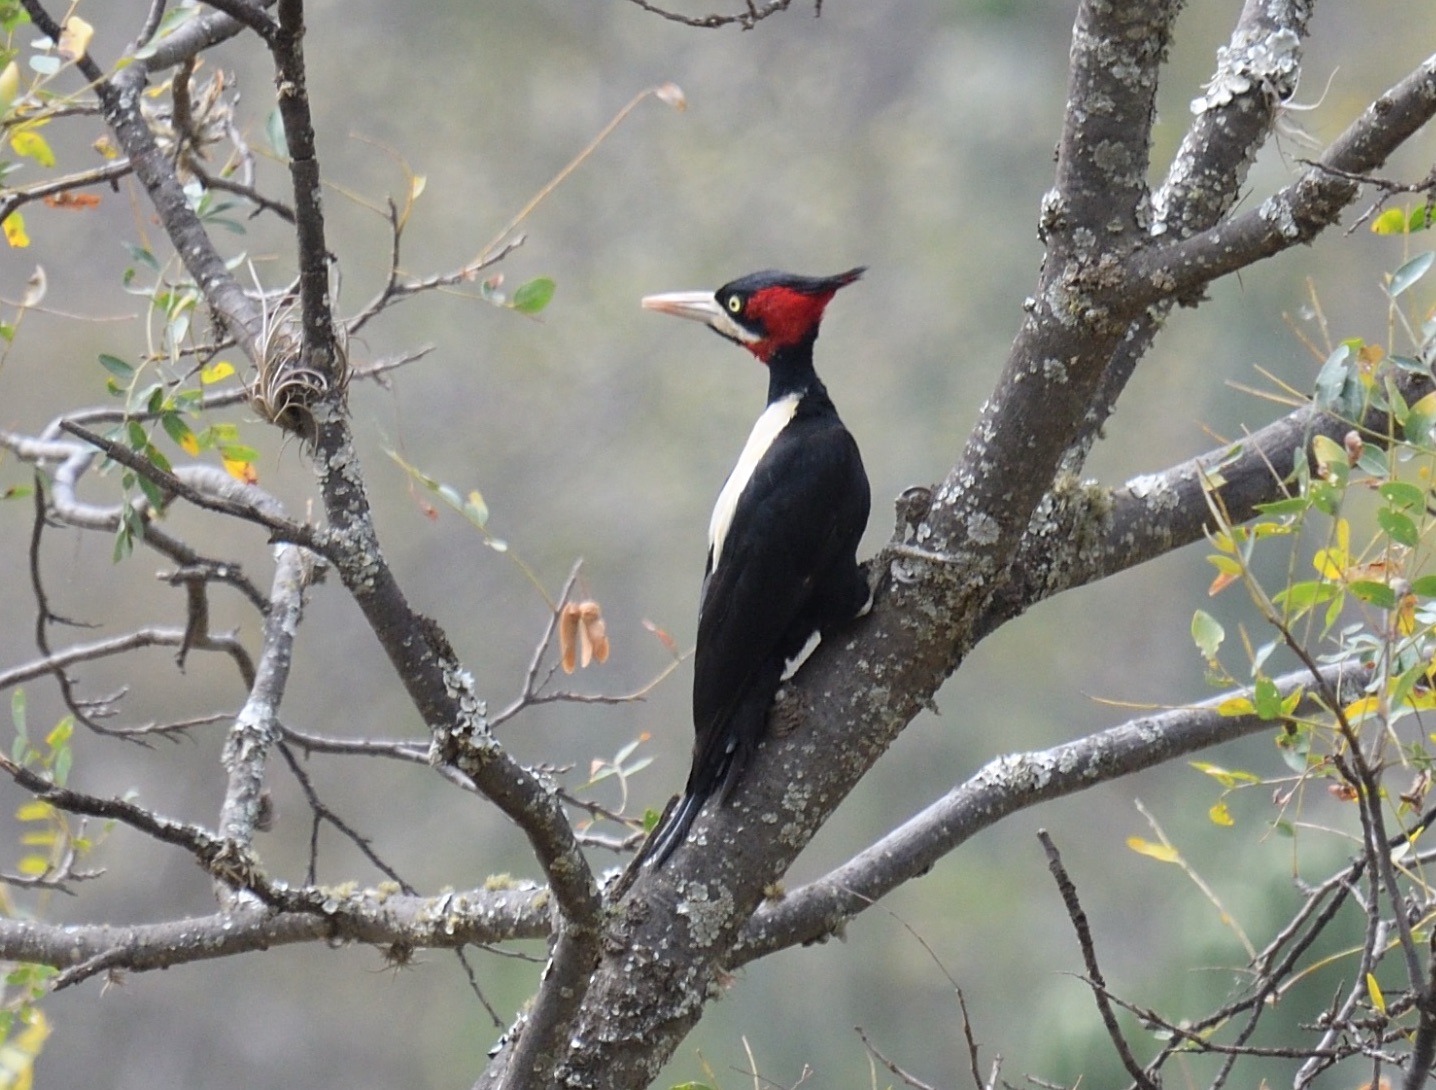 cream-backed woodpecker